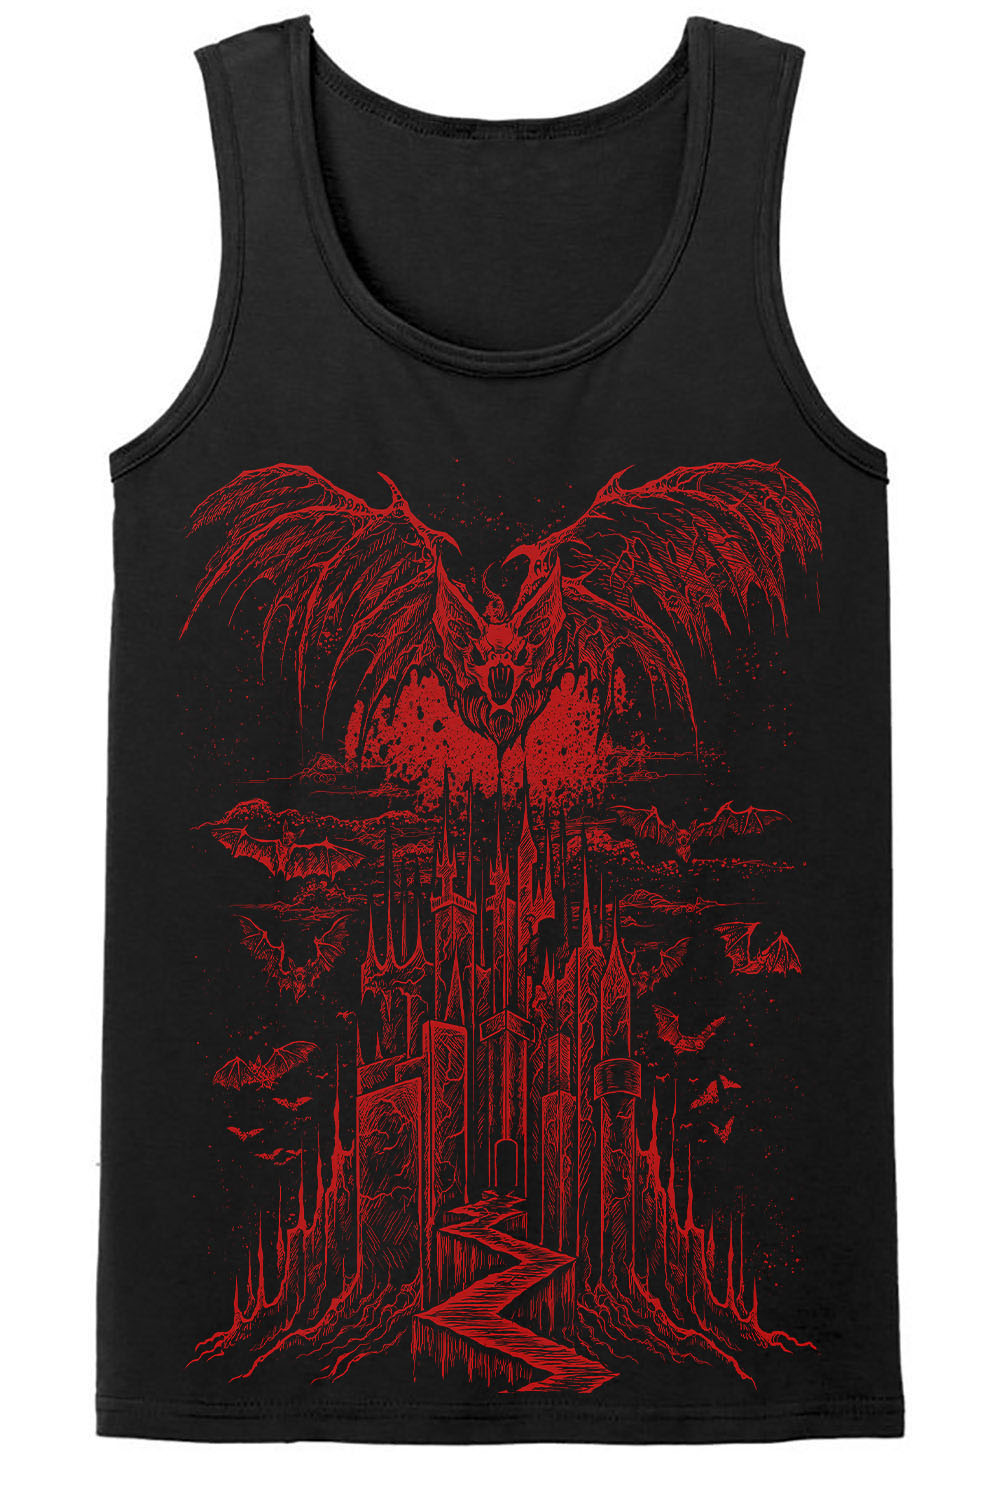 Vampire Castle T-shirt [BLOOD RED]